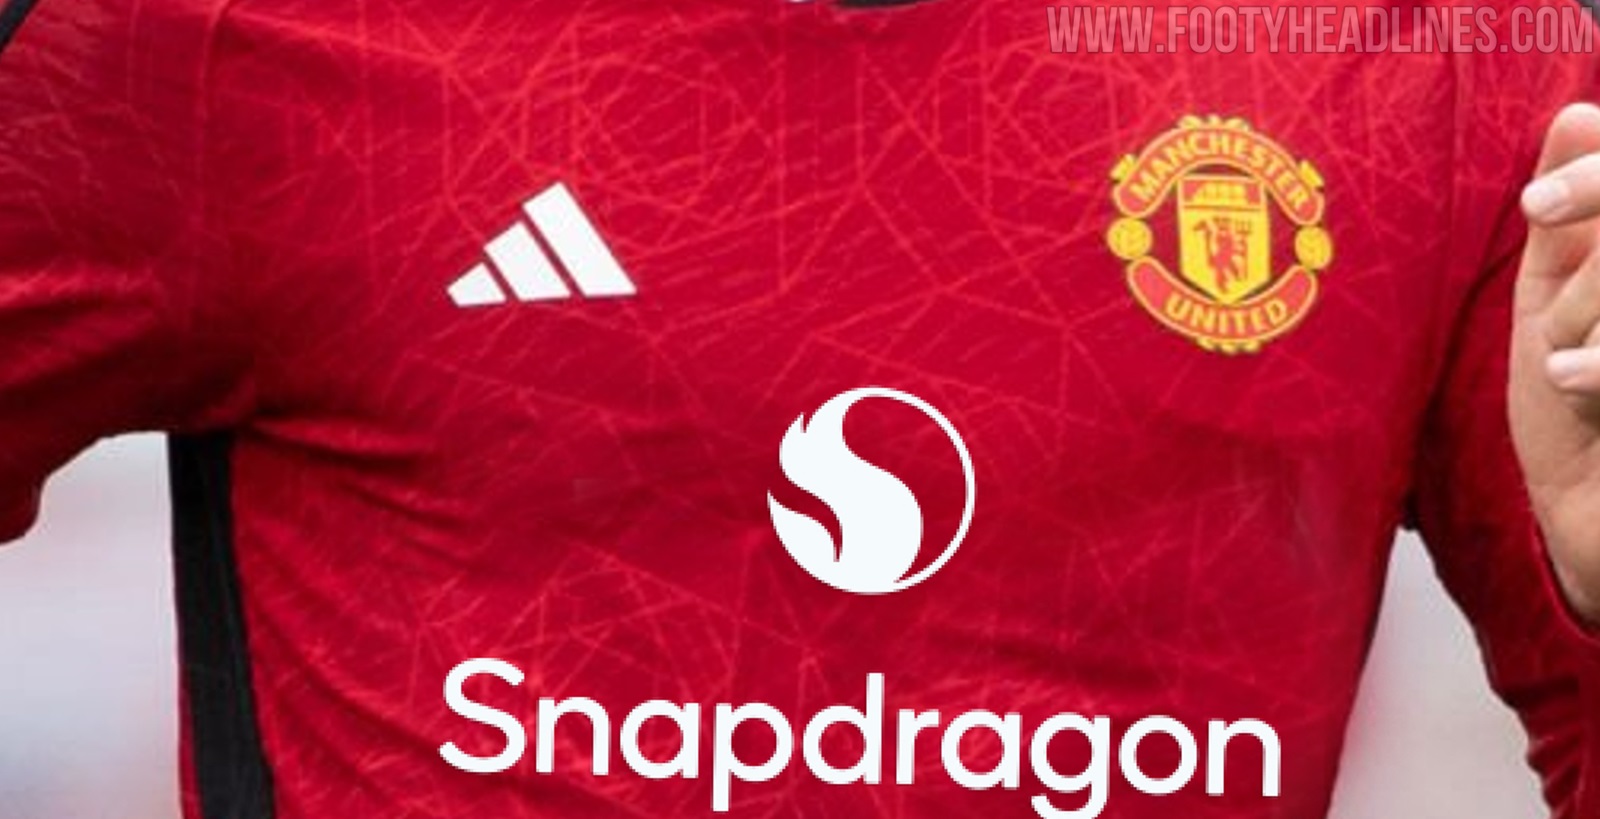 Manchester United Qualcomm Snapdragon Kit Sponsor Deal - Footy Headlines